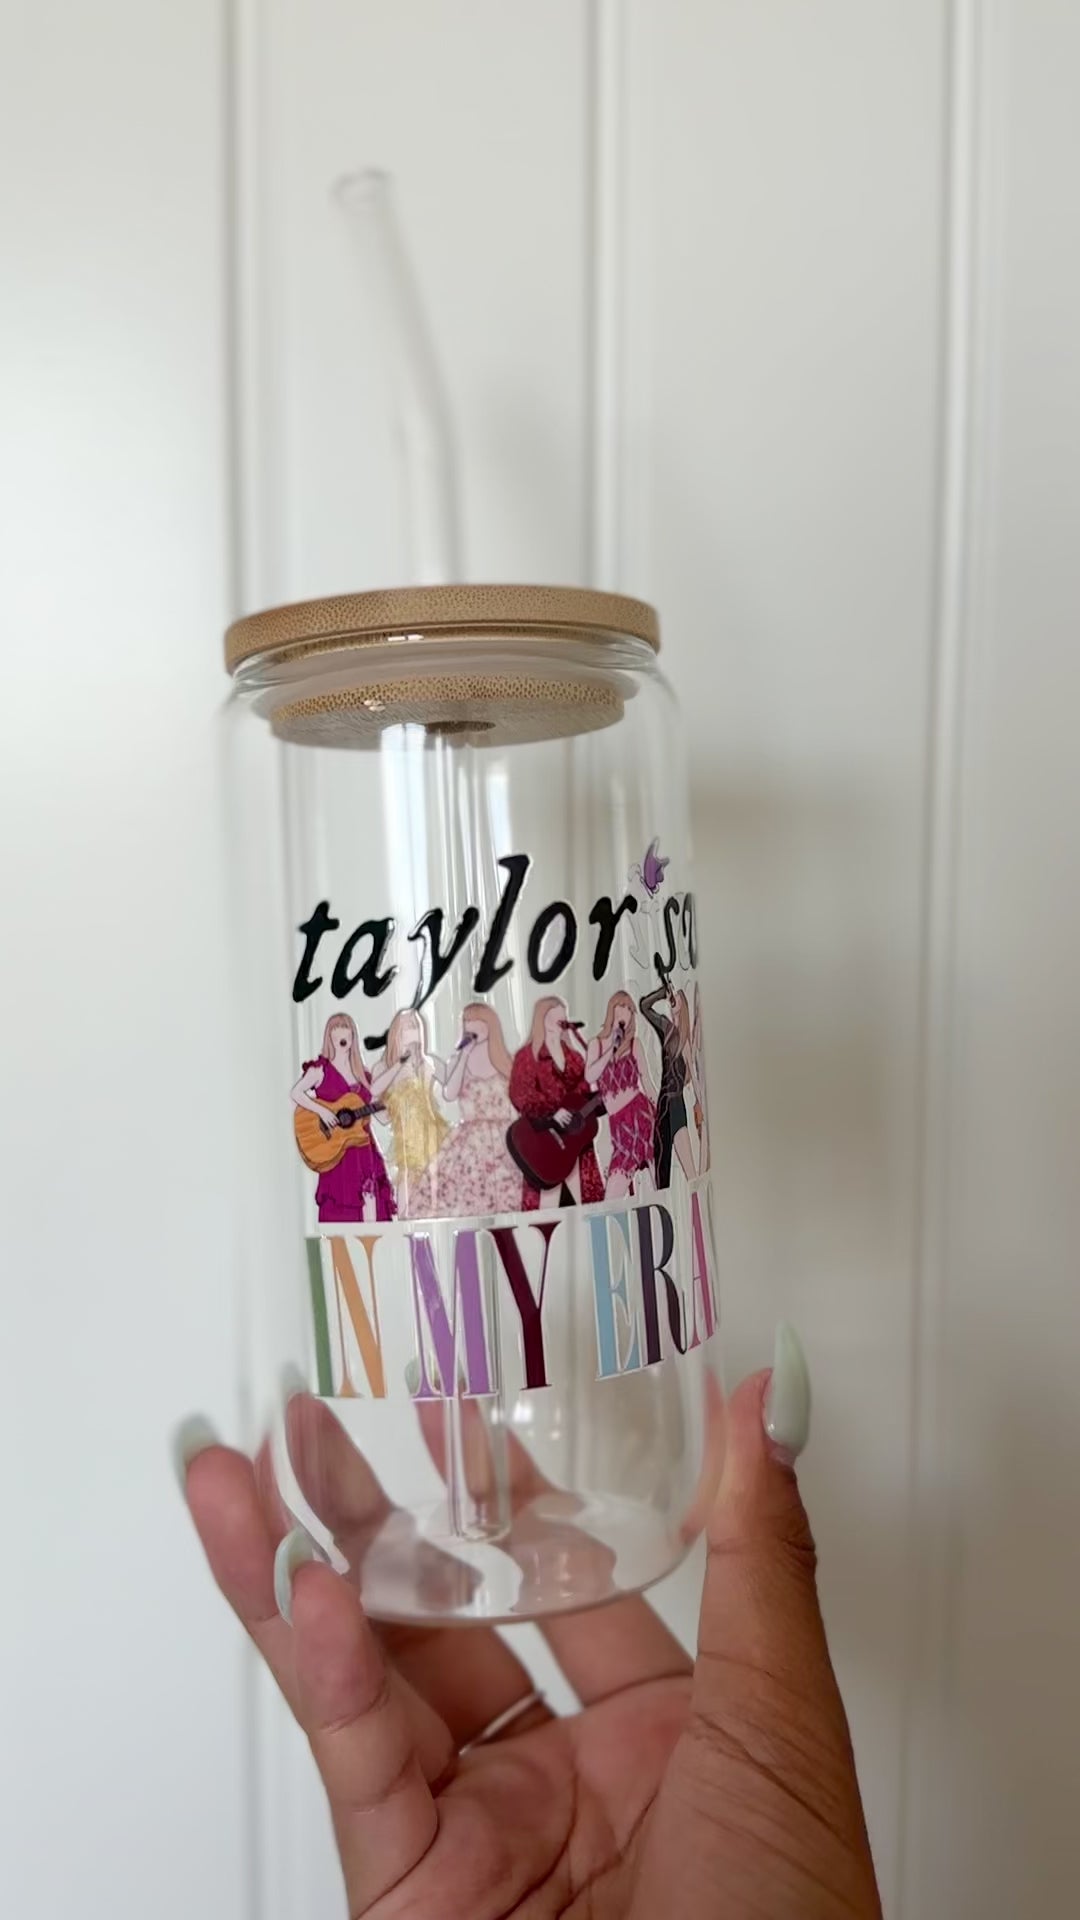 Taylor Swift Eras Tour Glass Cup